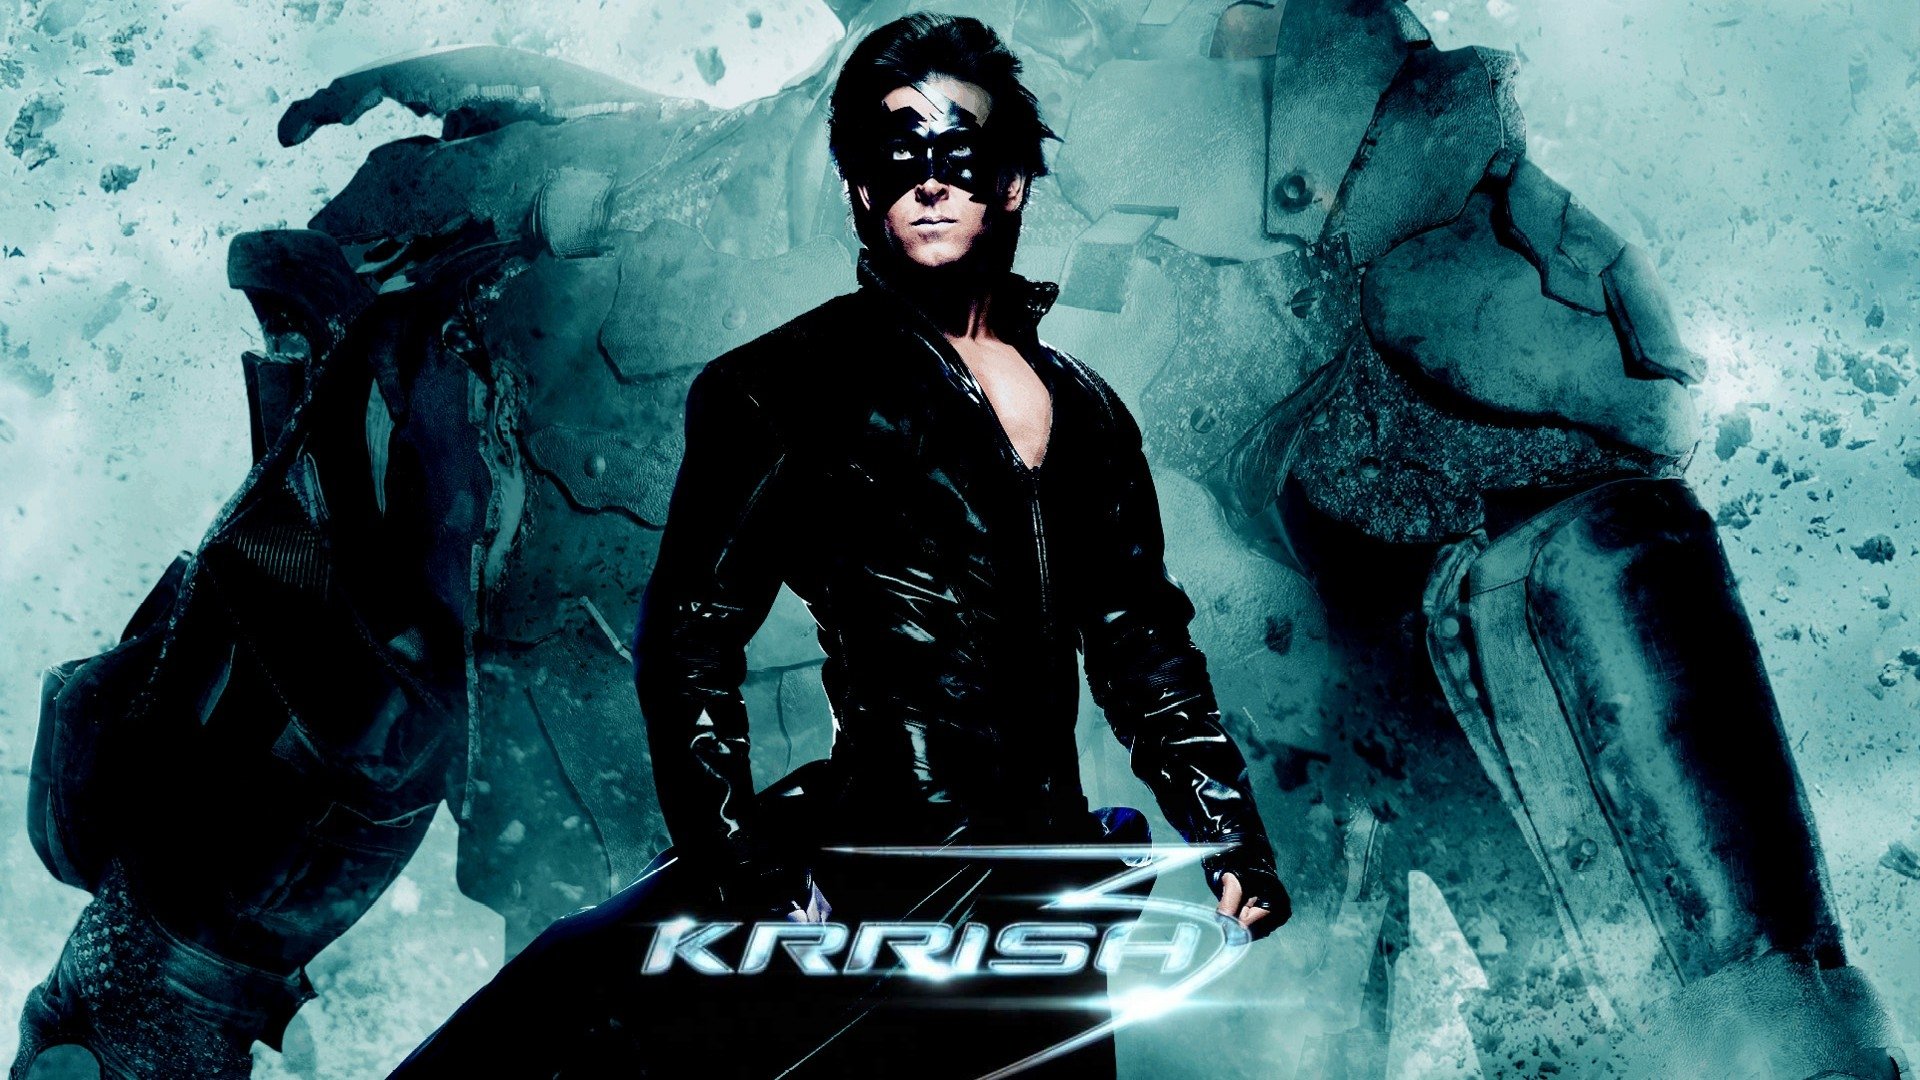 krrish, Bollywood, Superhero, Sci fi, Action, Adventure, Romance, Kangna, Ranaut Wallpaper